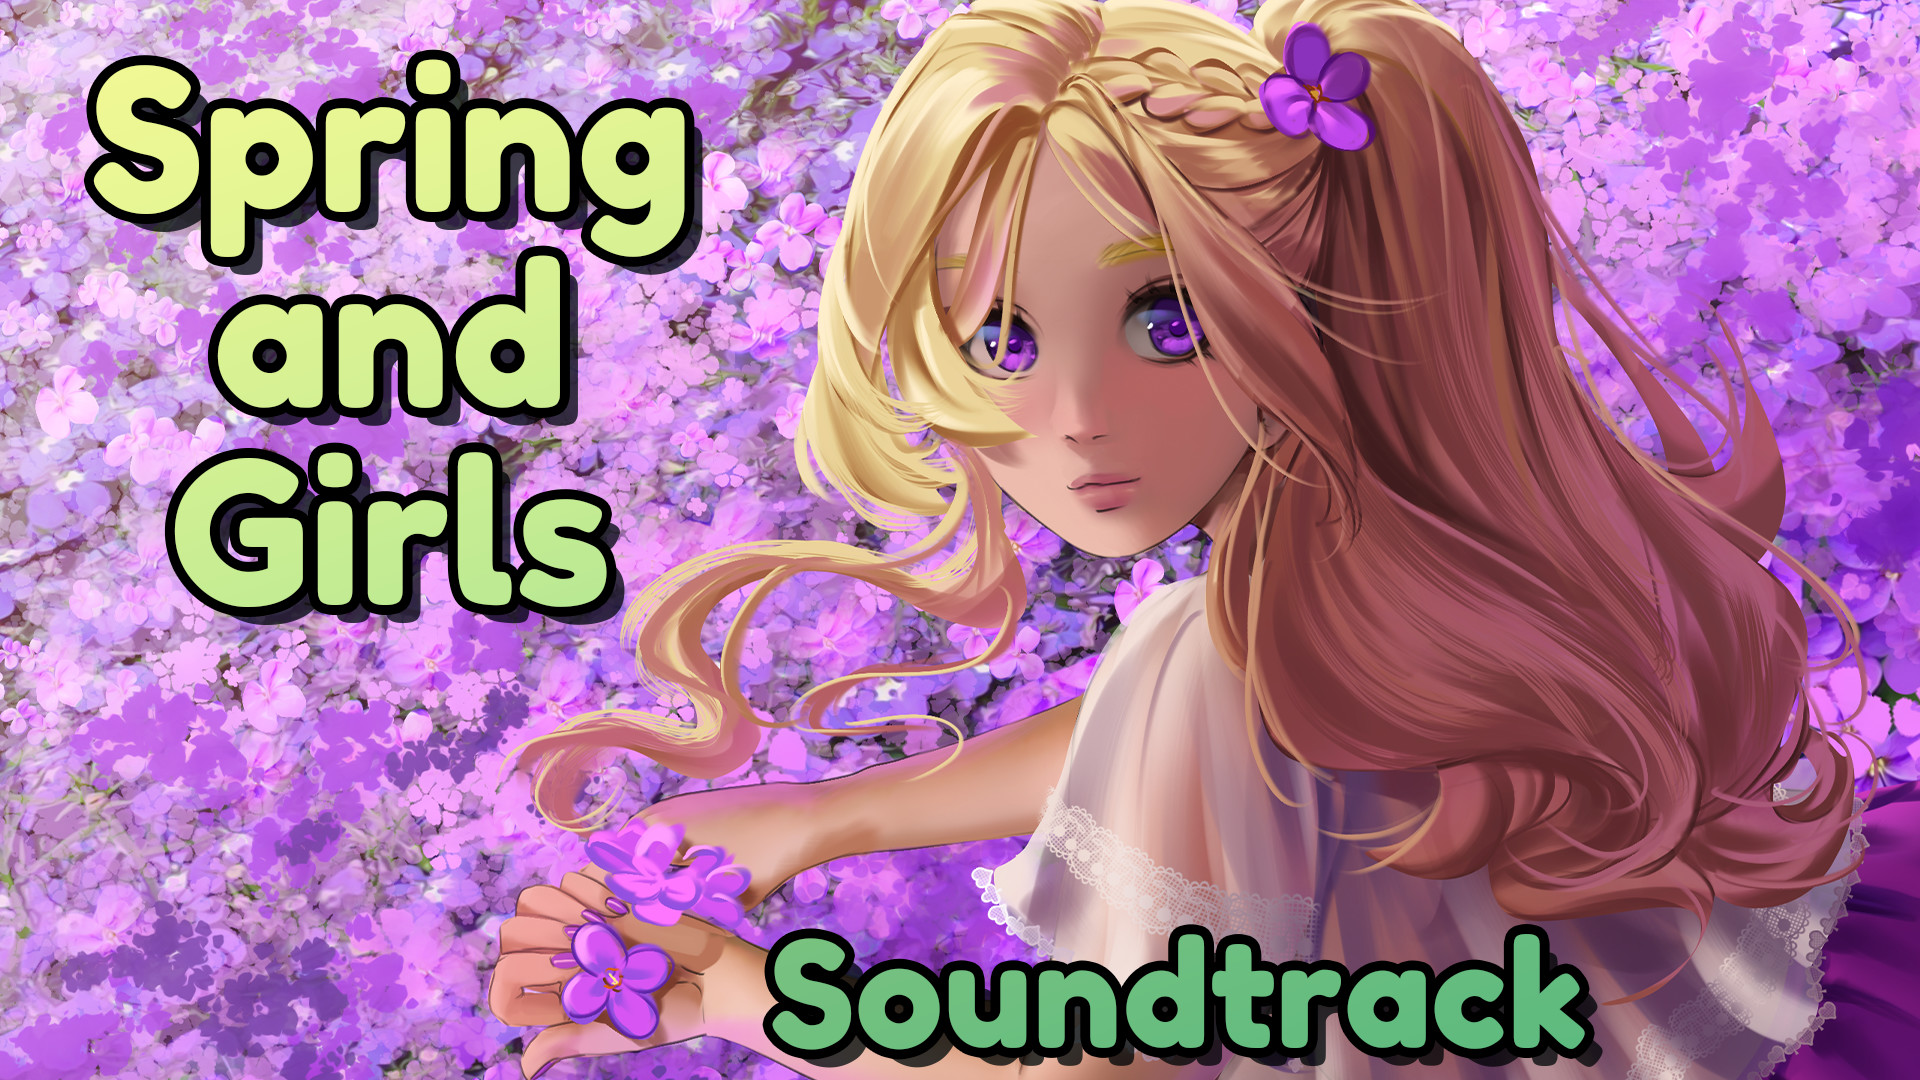 Girl soundtrack. Charlies Angels Bad girls Soundtrack.